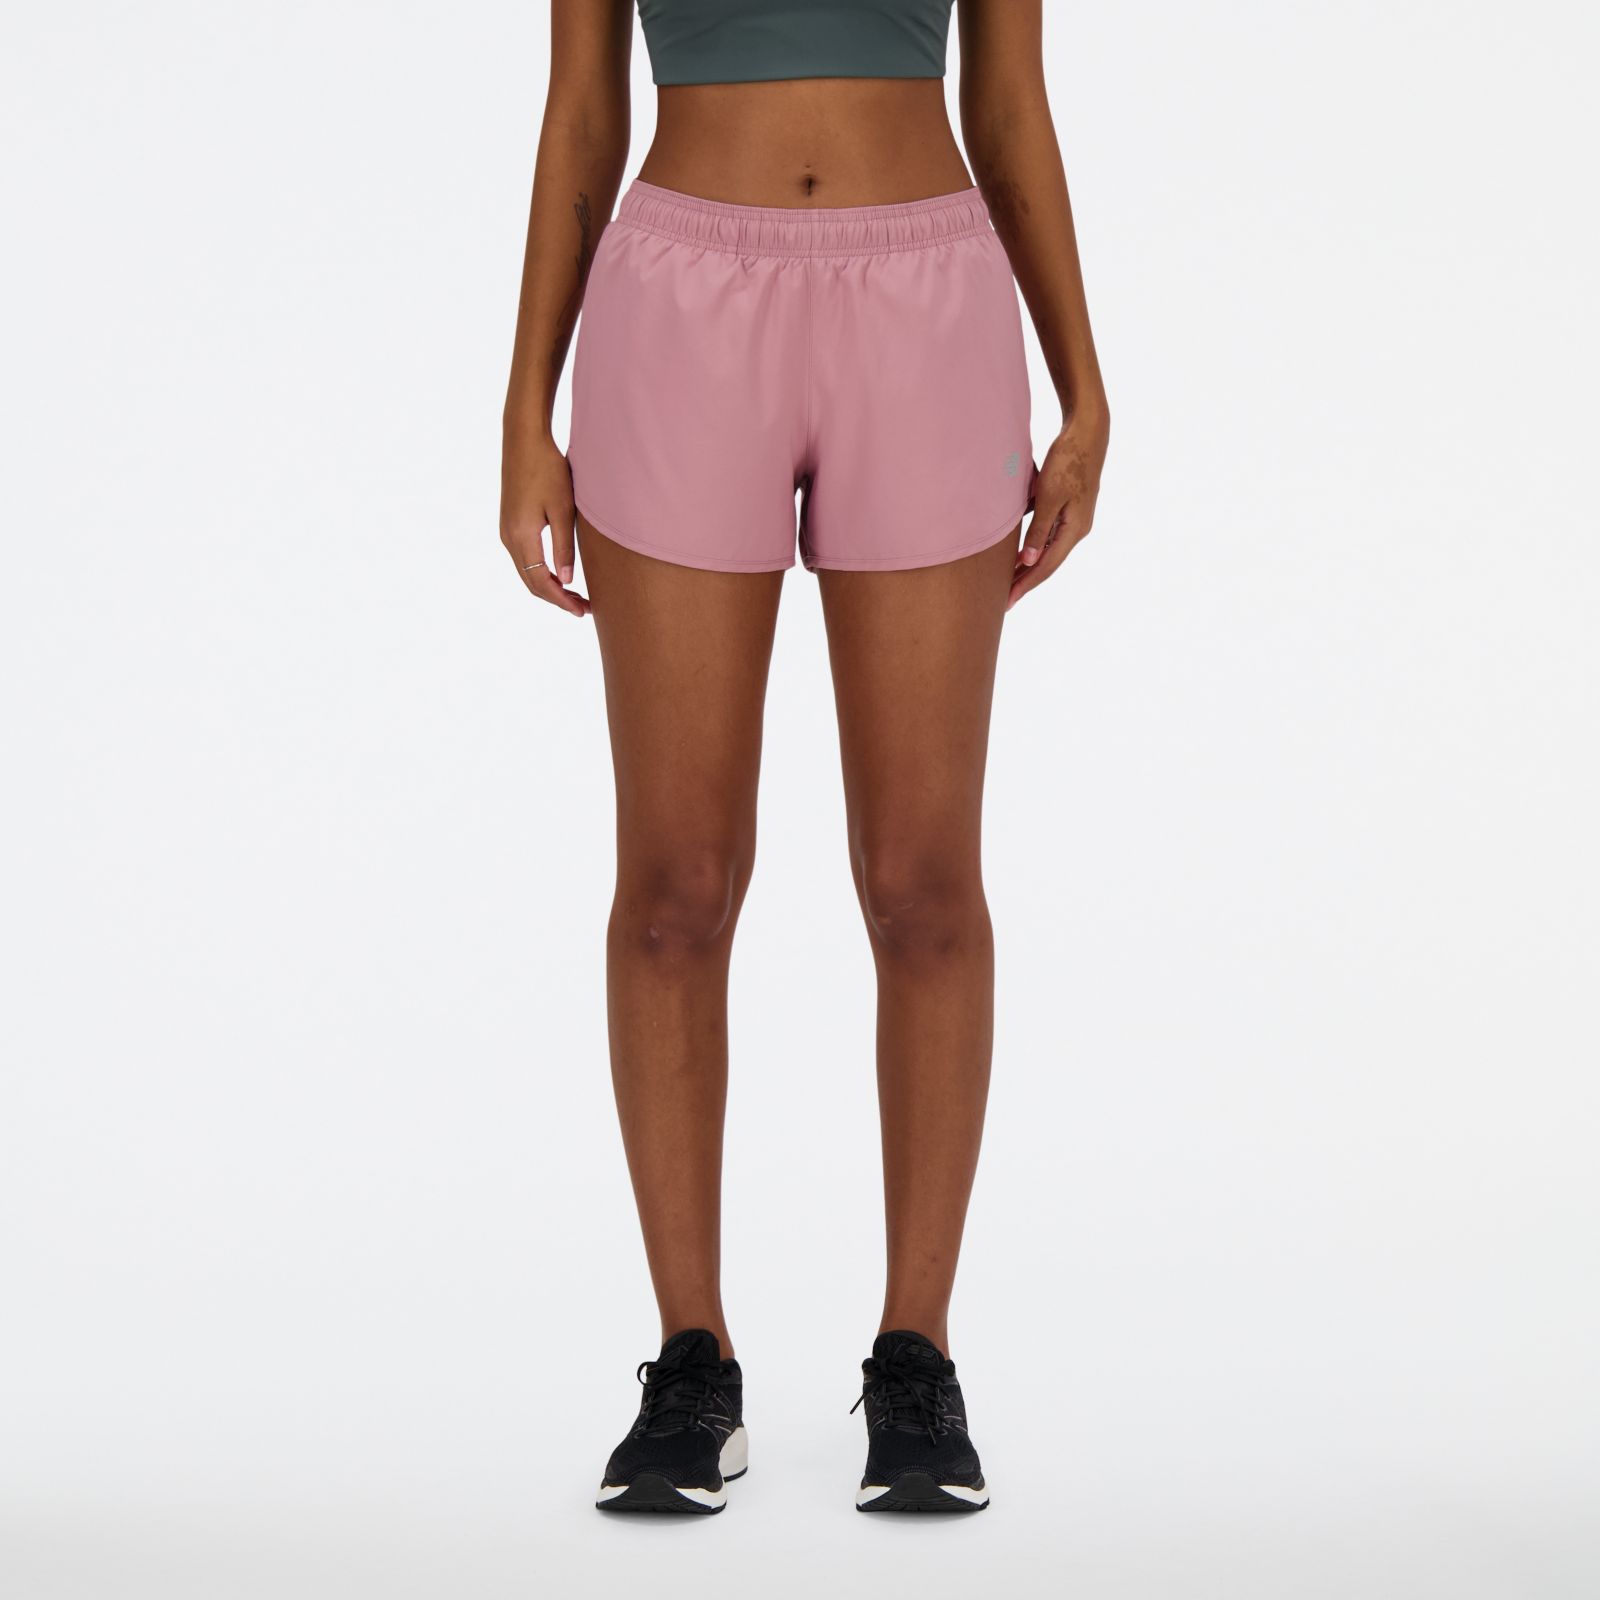 New Balance Lighting Dry Women's running Shorts Size Medium Lined